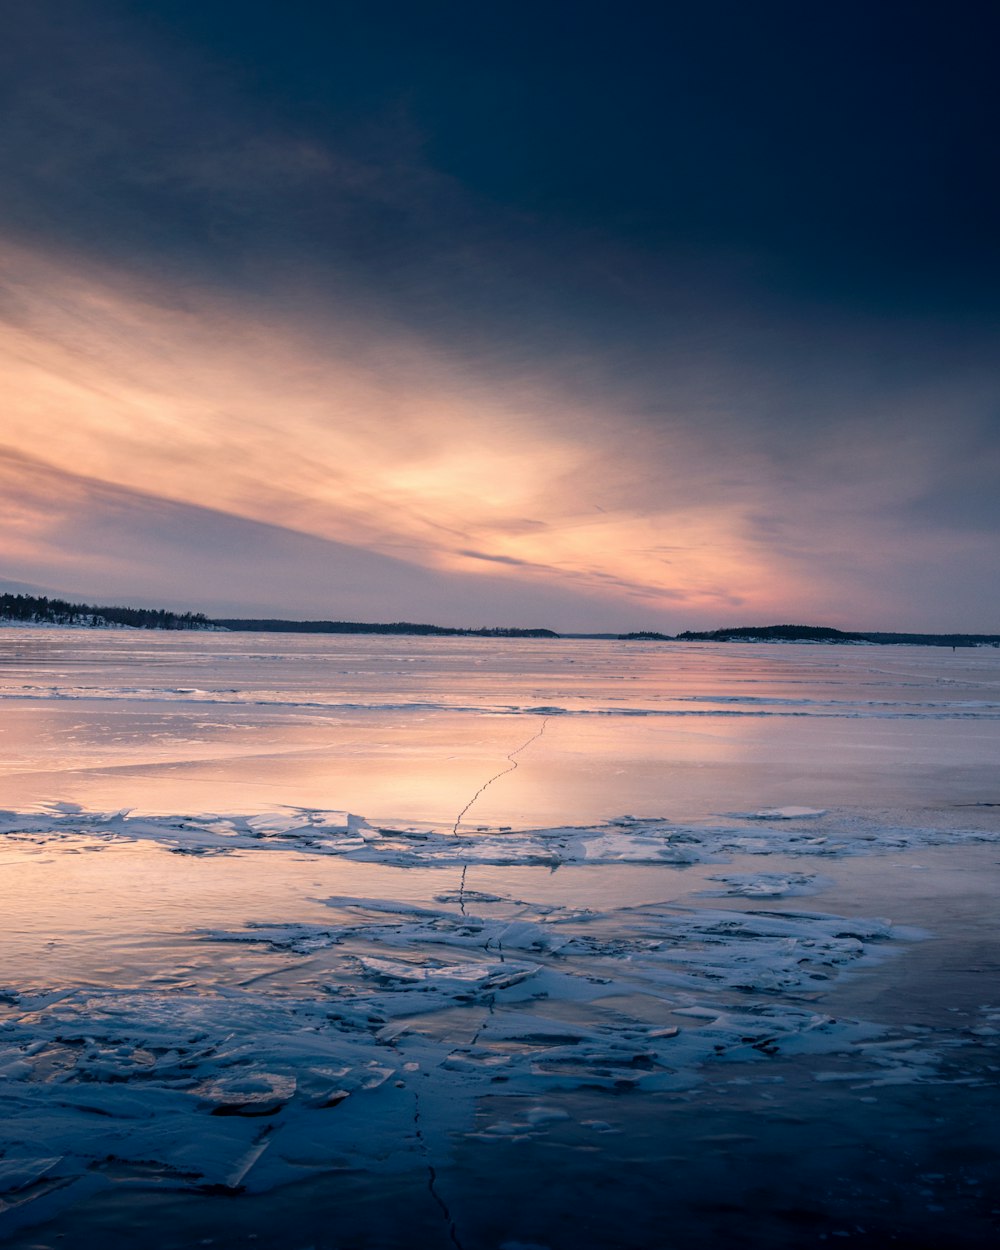 a man fishing on a frozen lake at sunset